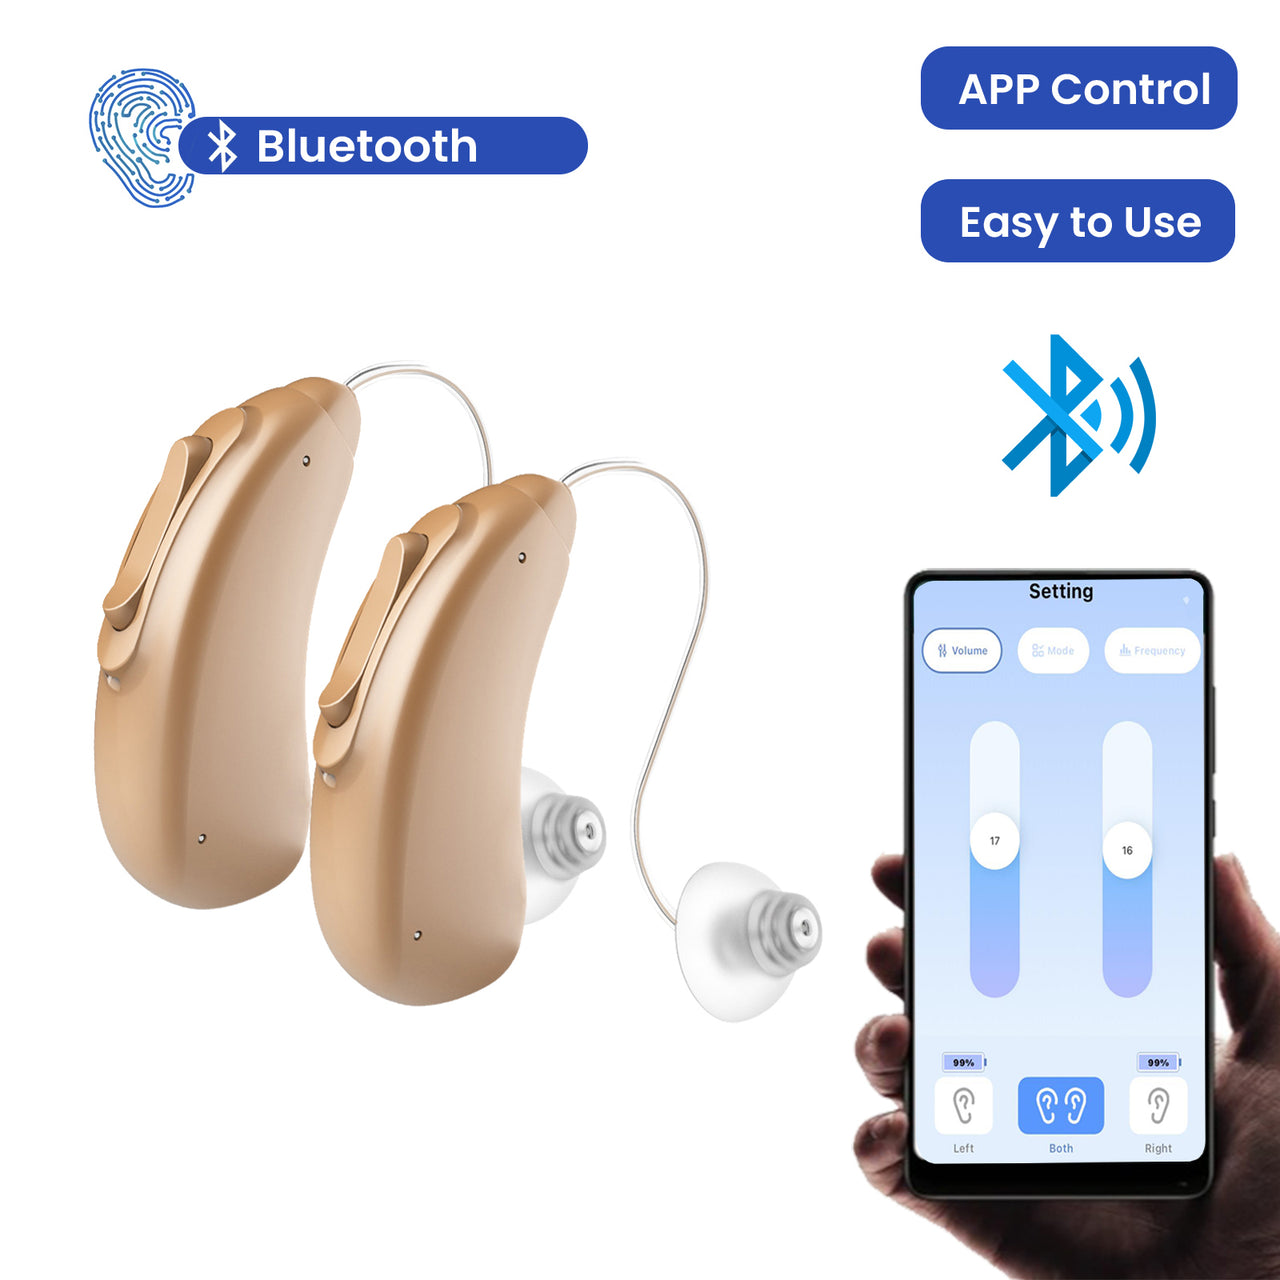 BTE Bluetooth RX OTC Hearing Aids